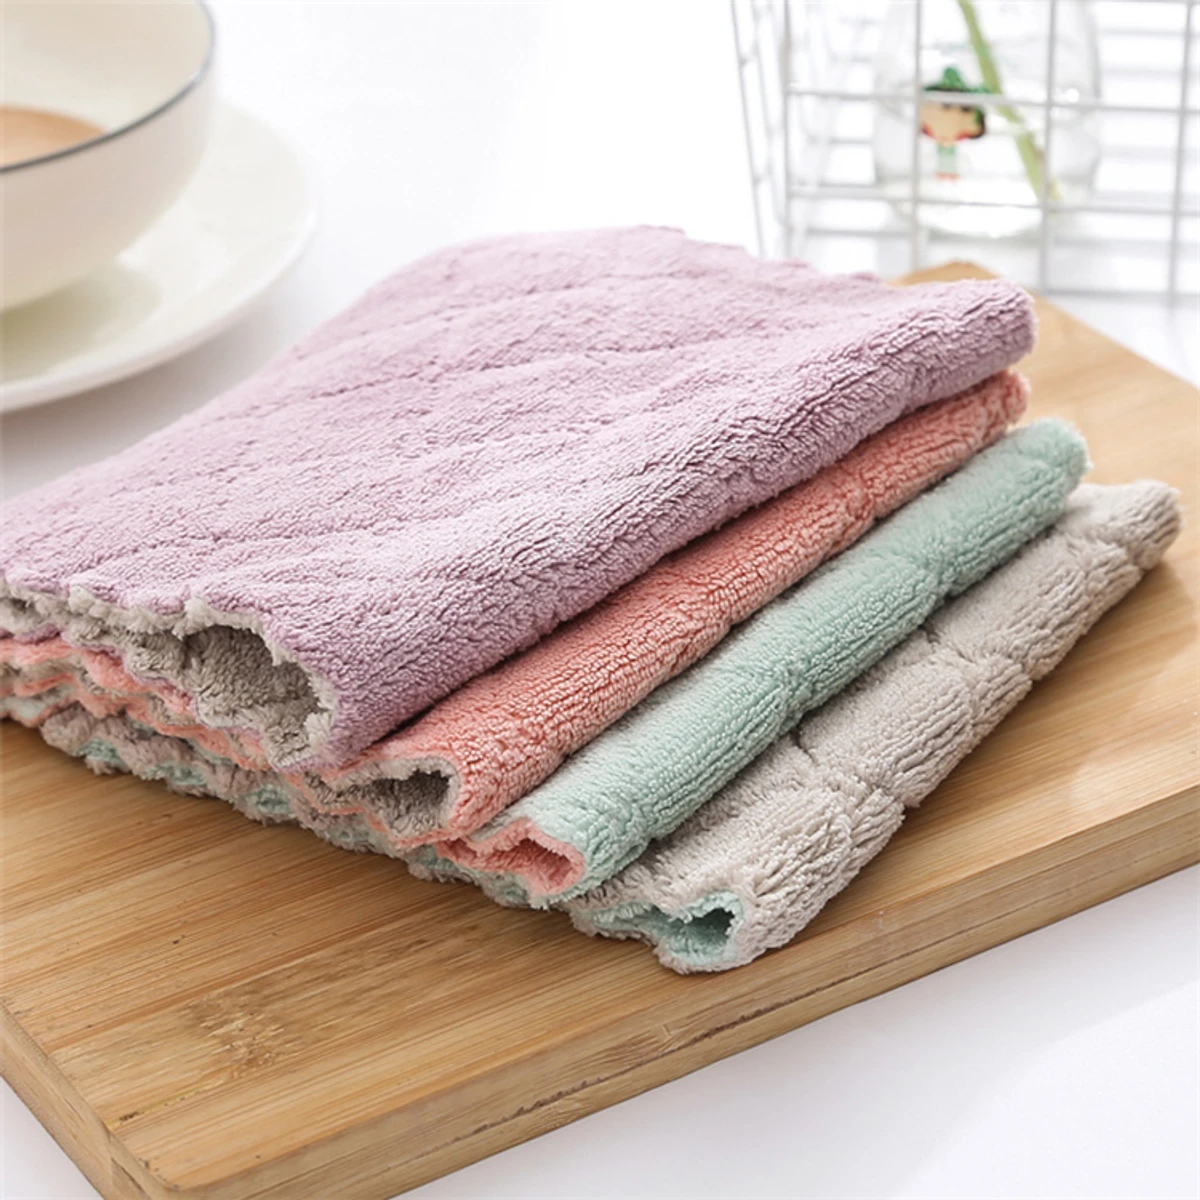 LMETJMA 10pcs Kitchen Cloth Dish Towels Super Absorbent Coral Velvet Dishtowels Nonstick Oil Washable Fast Drying JT224